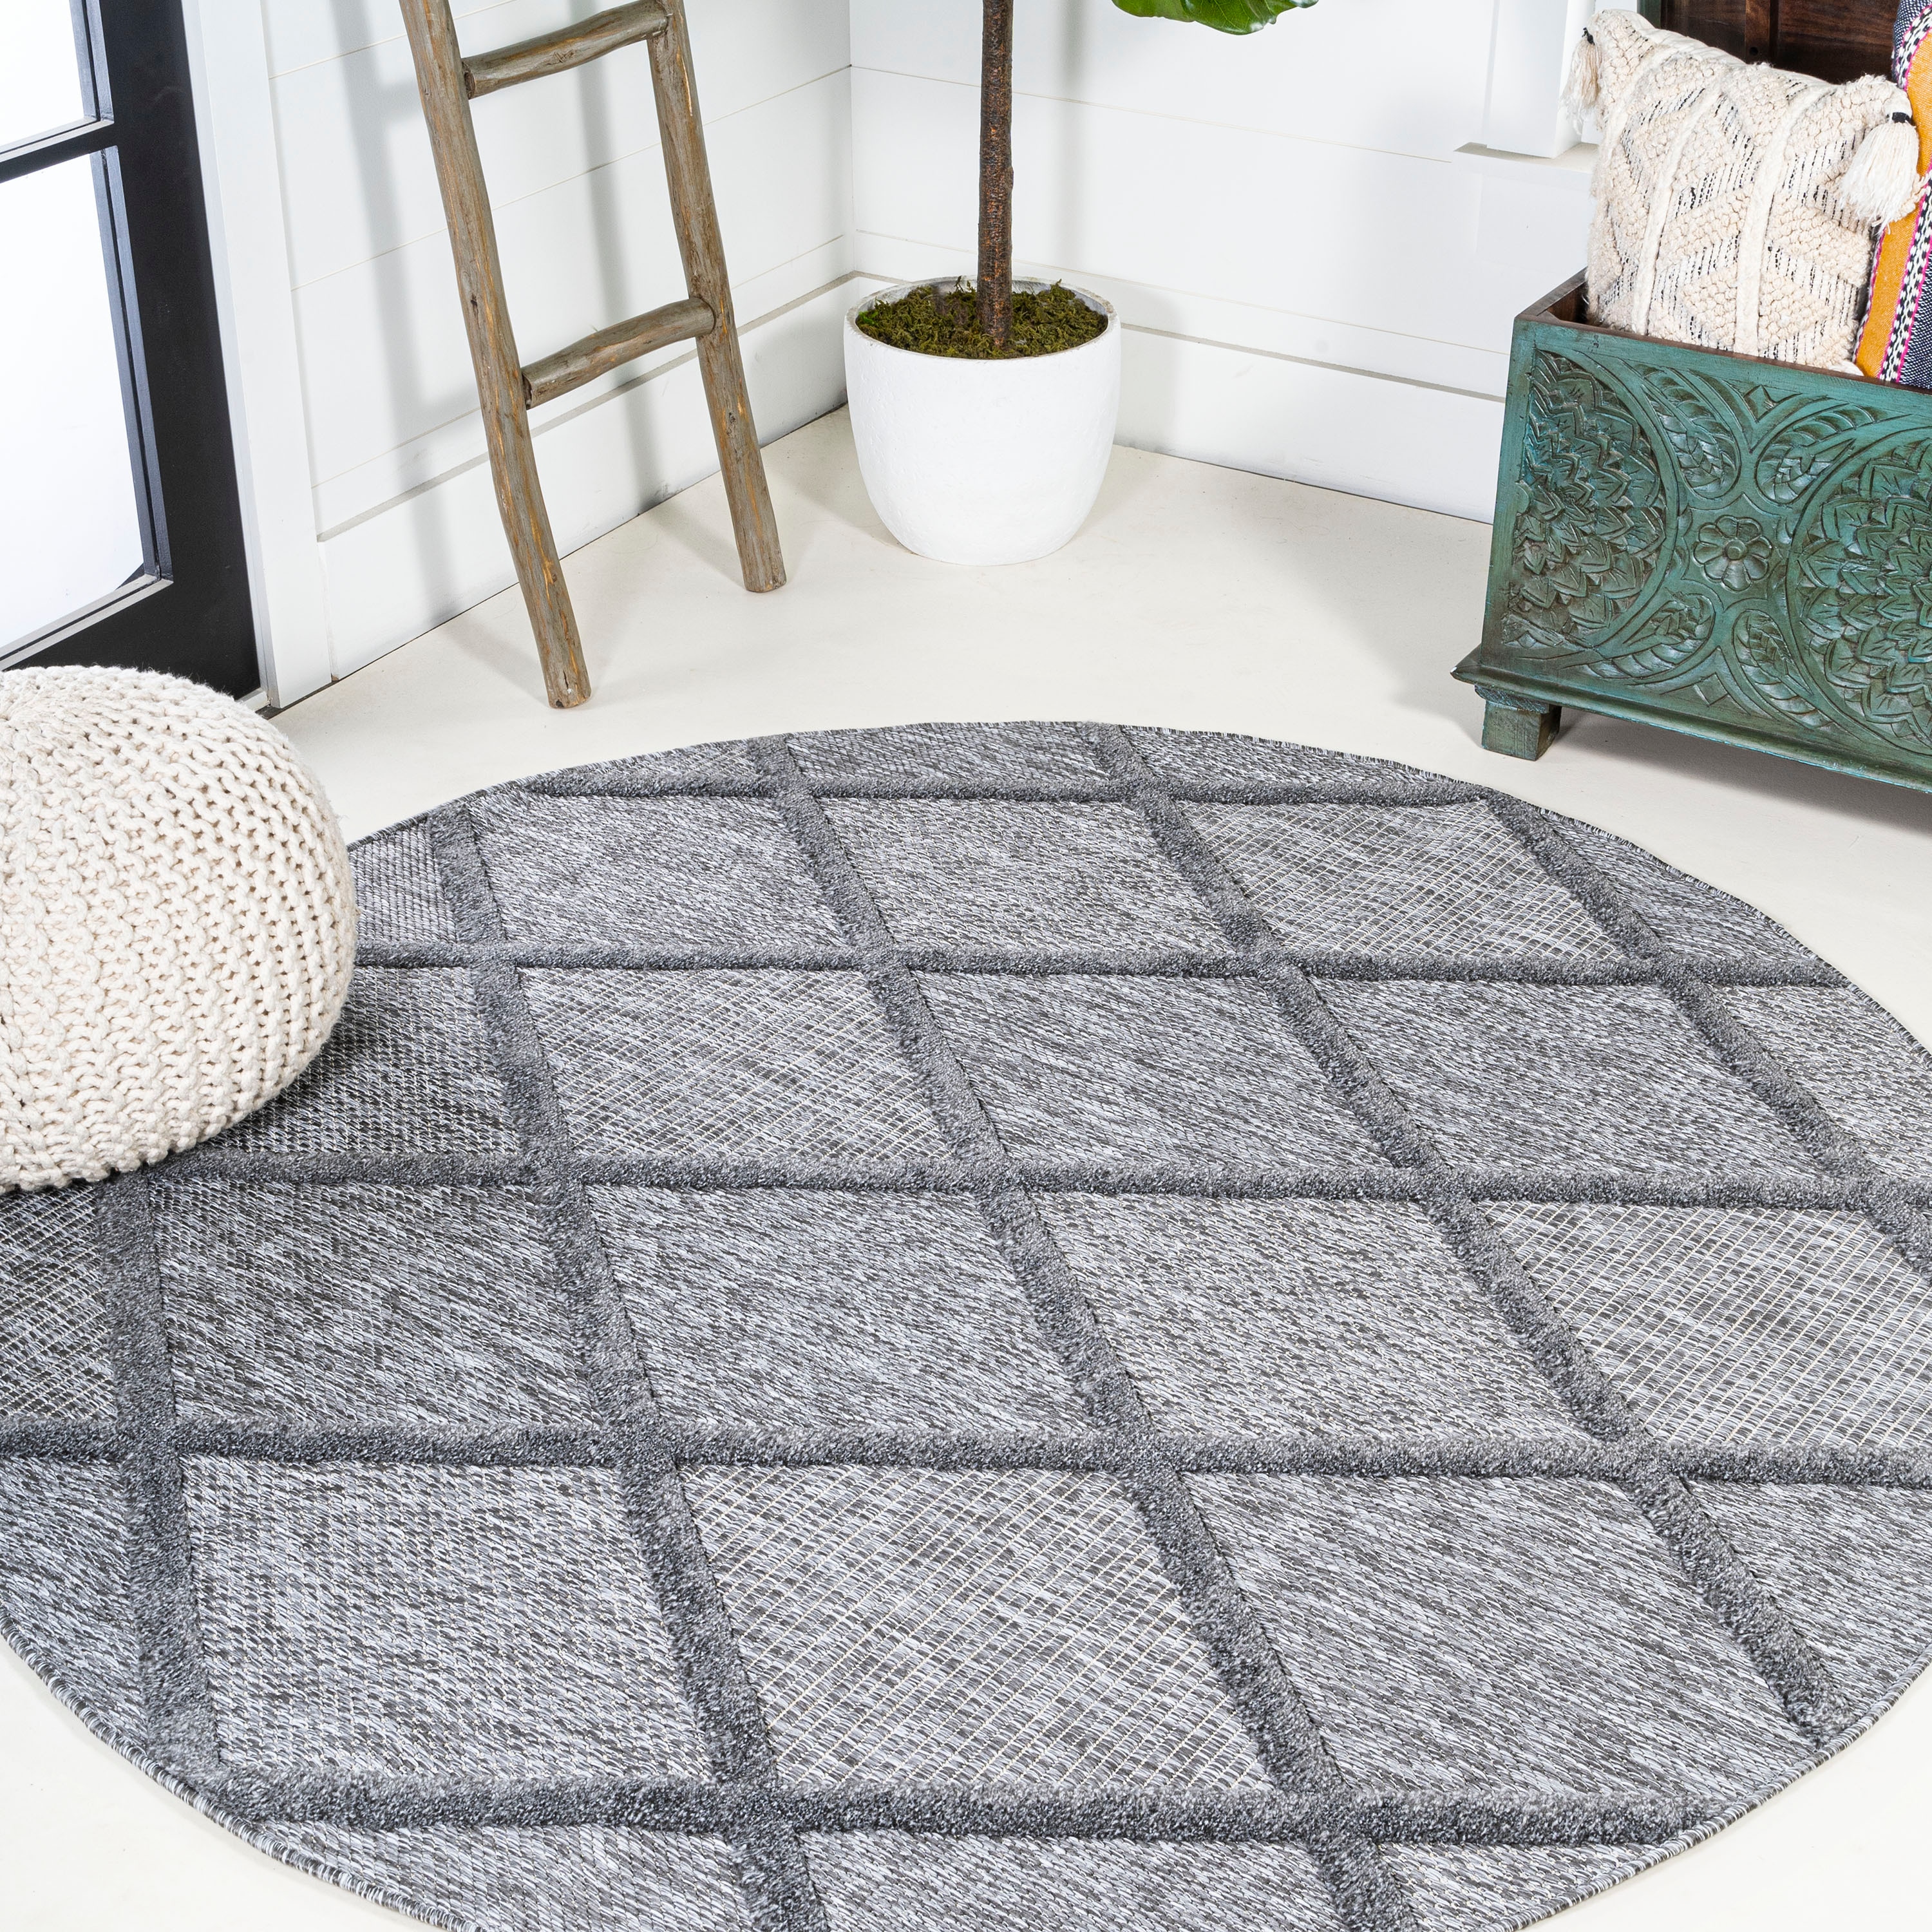 4 Size Round Outdoor Floor Rug Mat Pads Geometric Acrylic Fibres Non-slip Carpet 